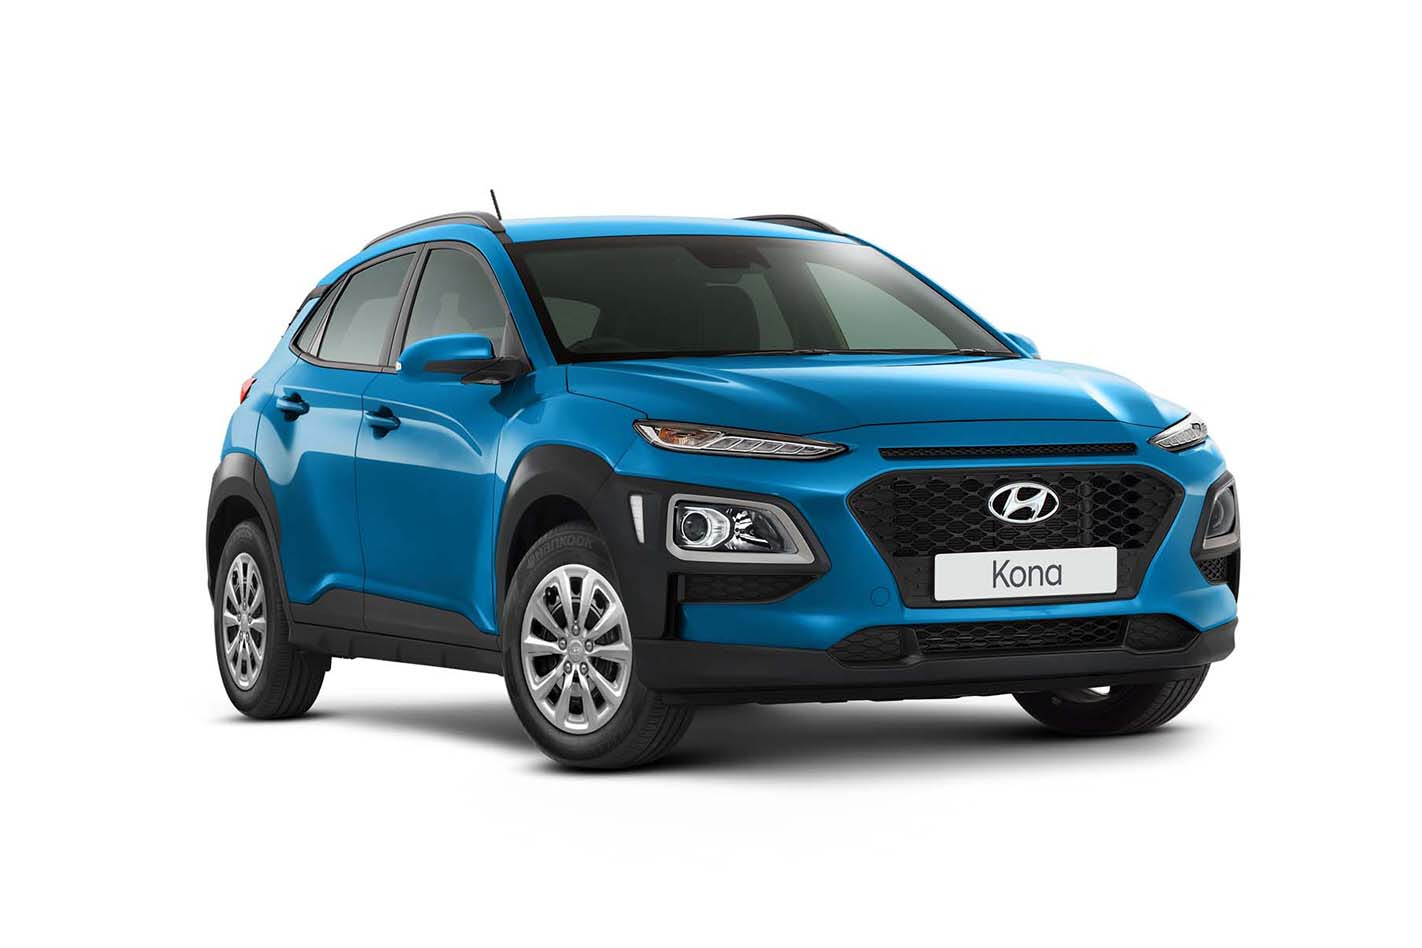 Hyundai Kona 8/8 Review, Price & Features